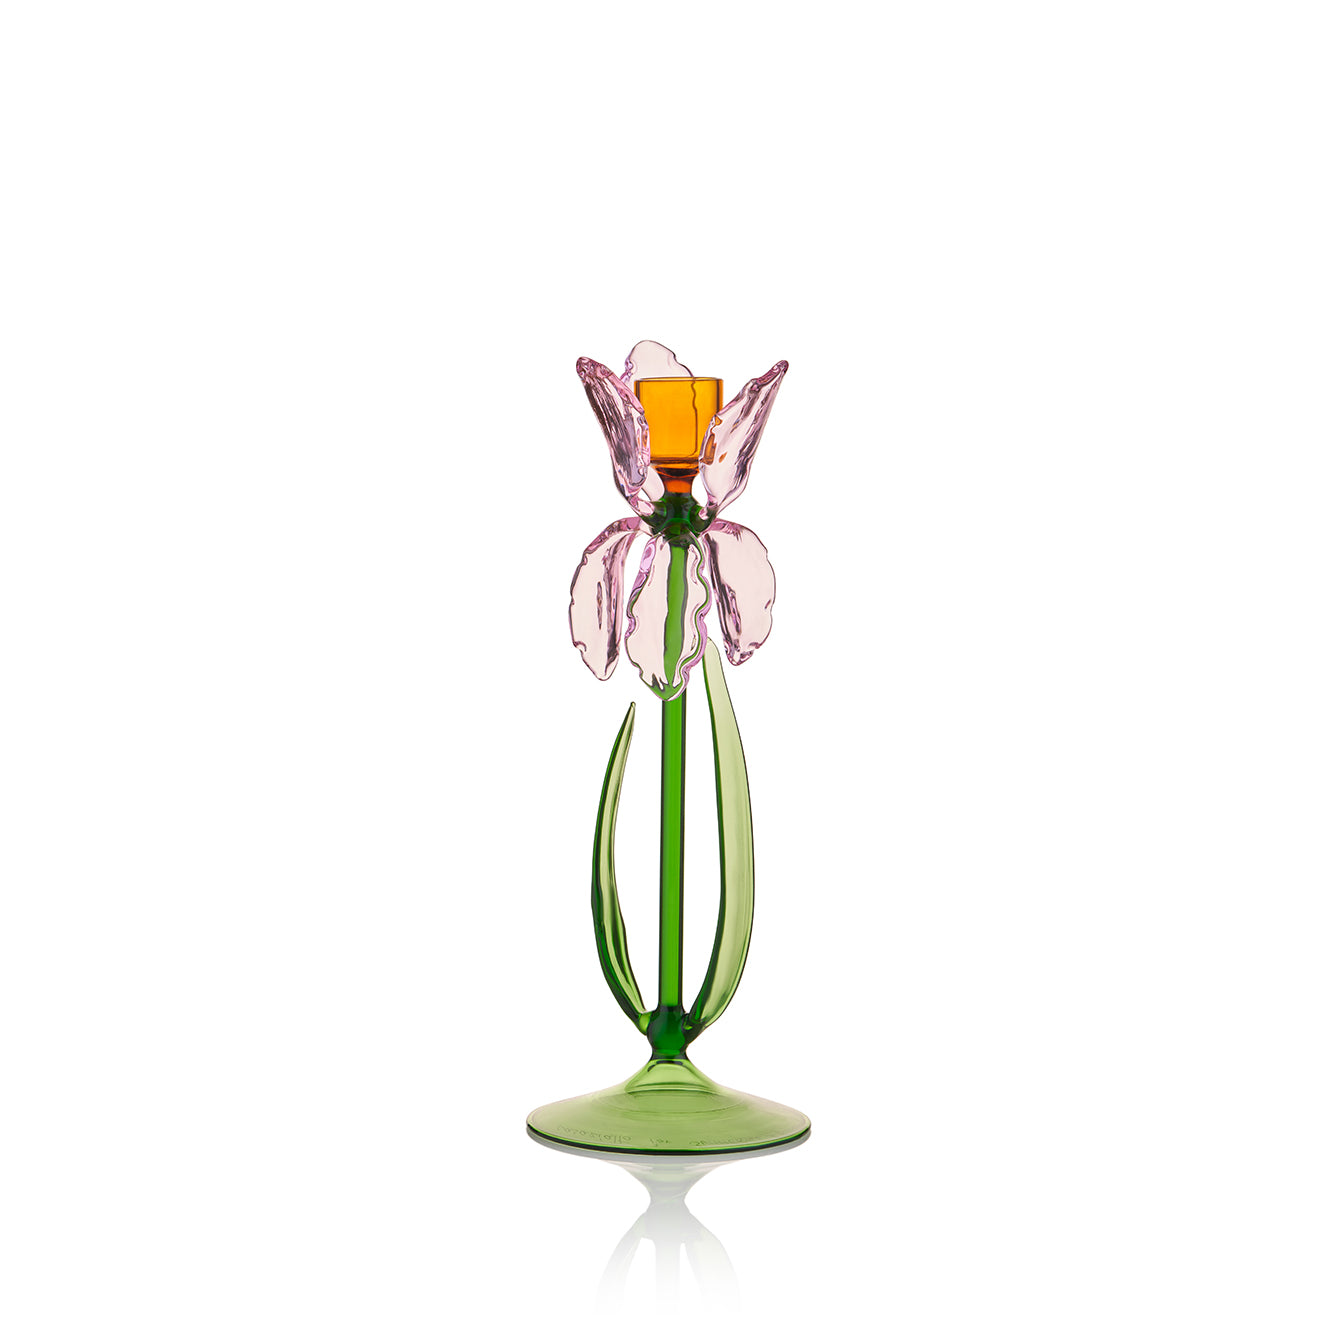 S&B Exclusive Handblown Murano Iris Candlestick in Pink, 27cm